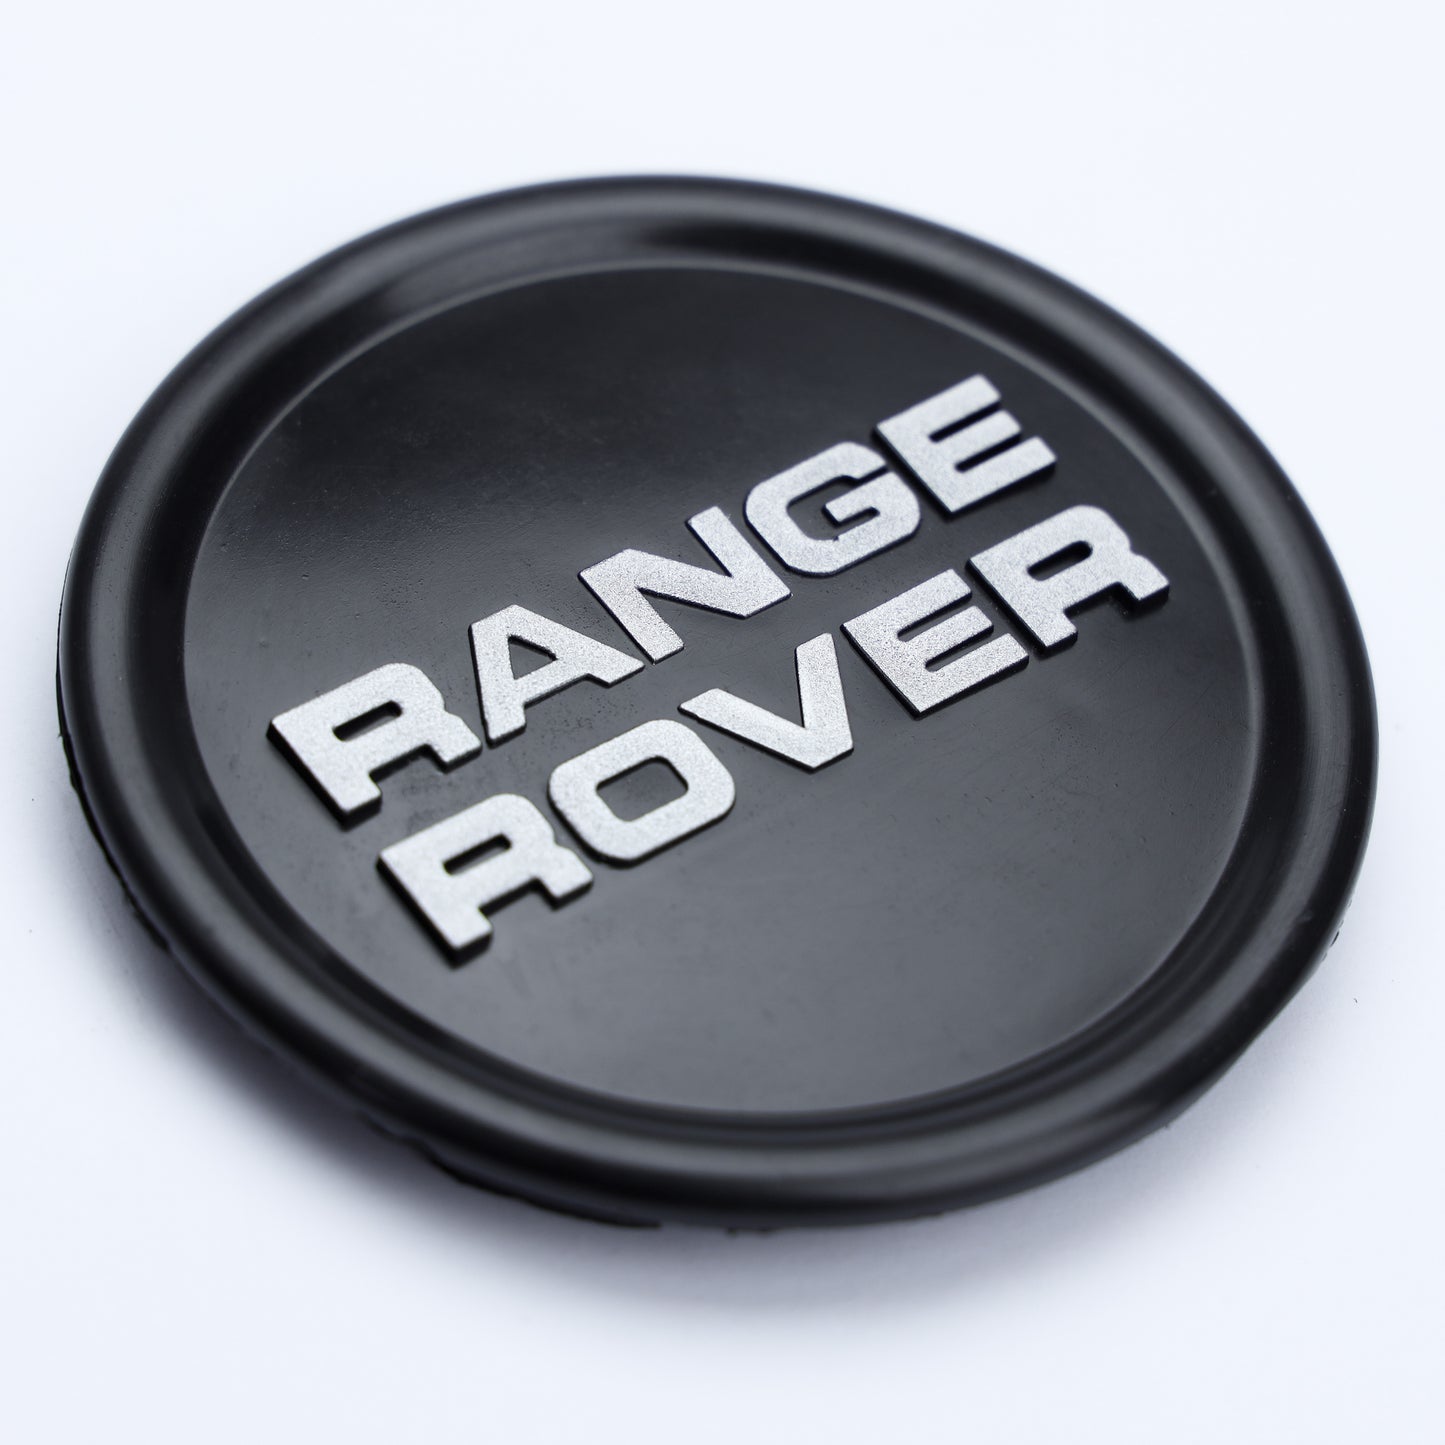 Genuine Wheel Centre Cap for Range Rover Classic - Black